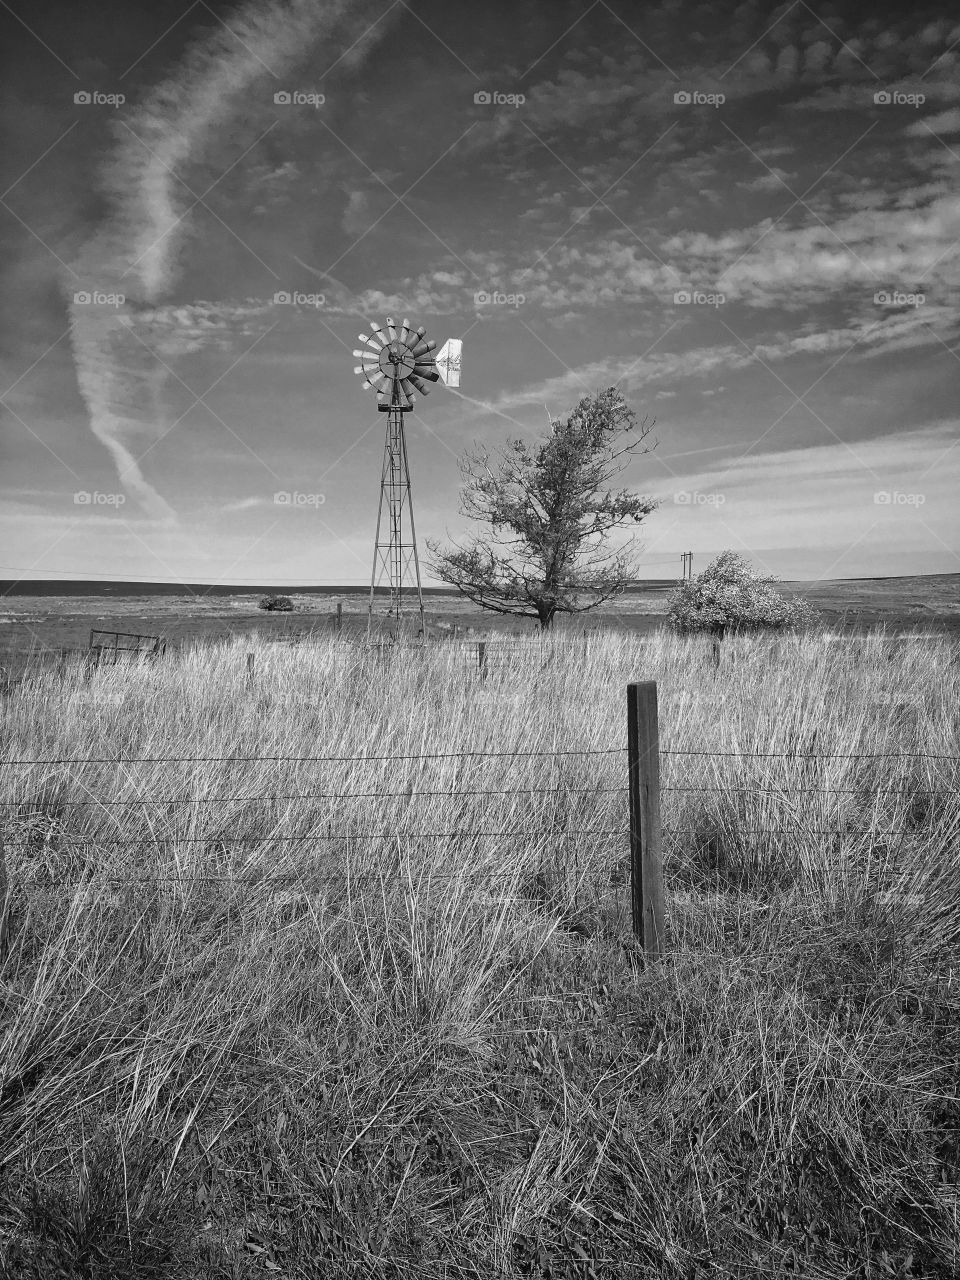 Windmill on Abandoned Rural Farm